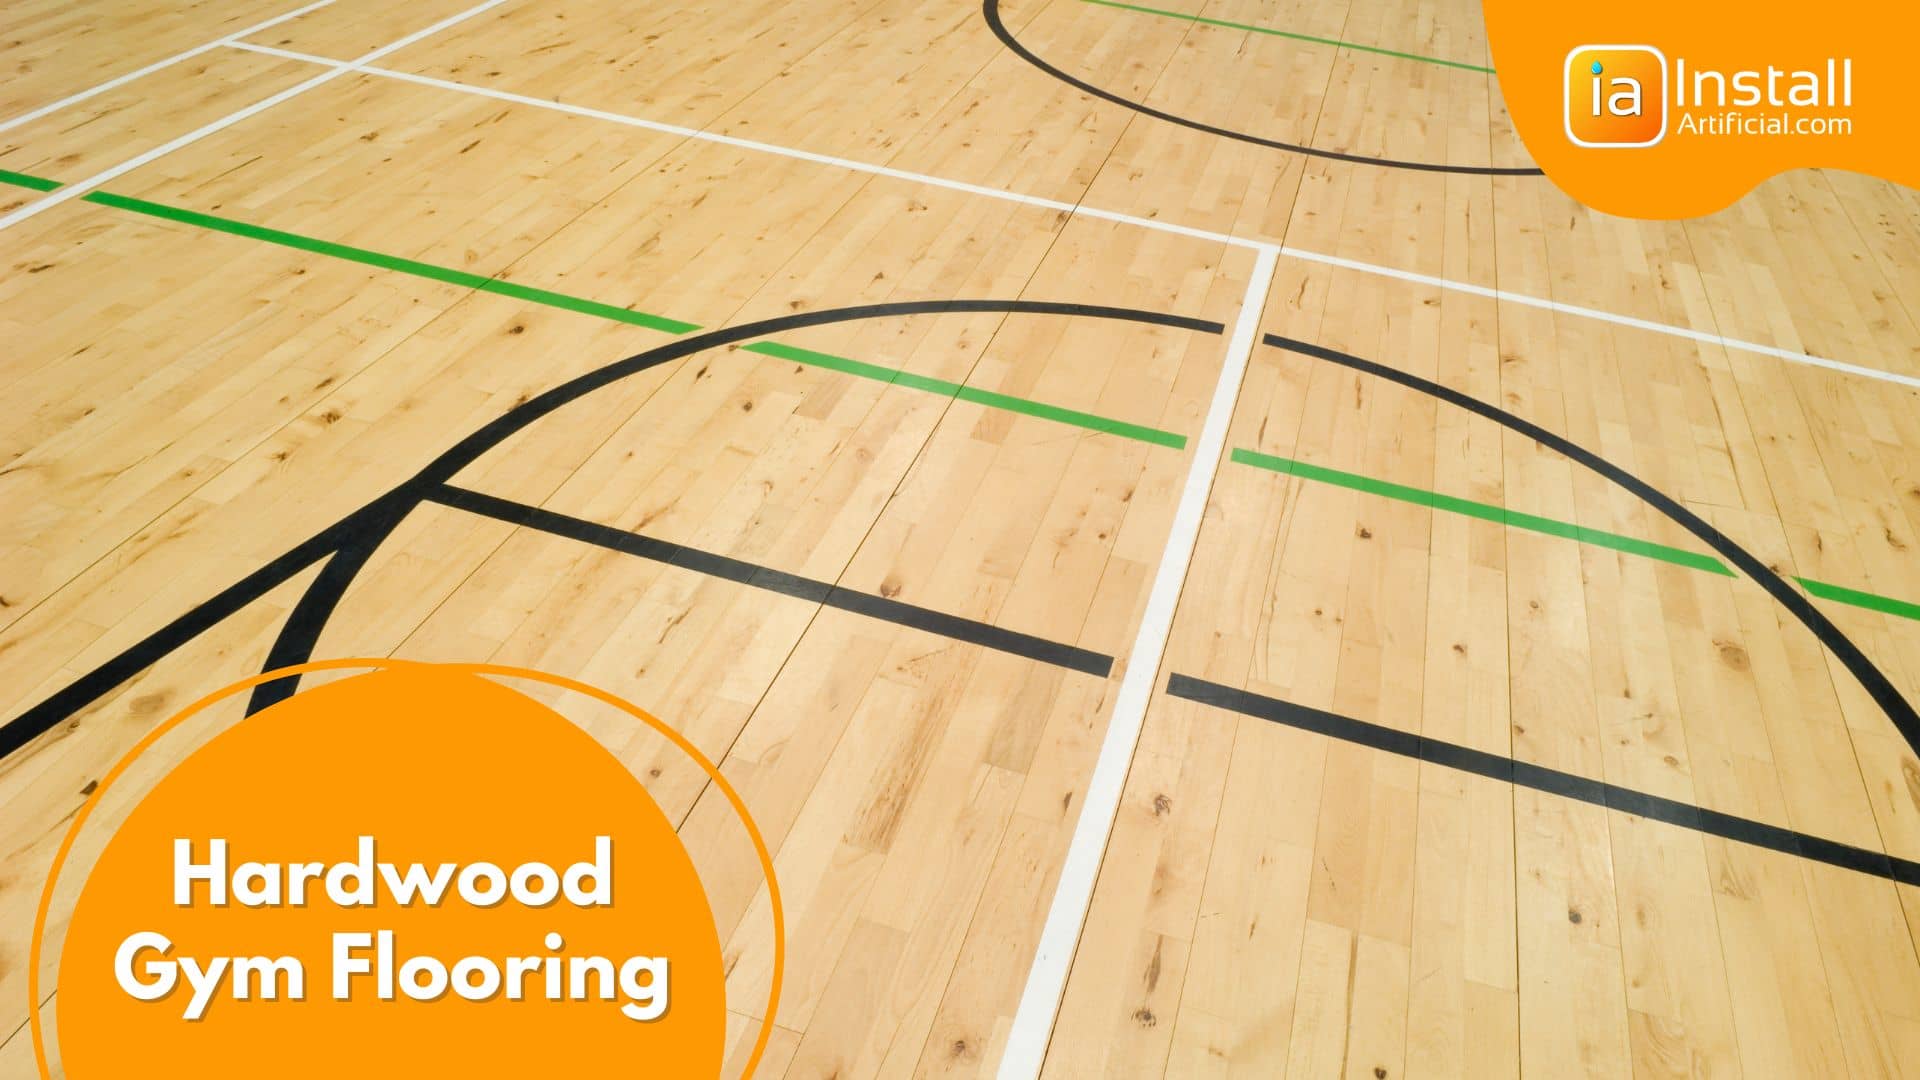 Hardwood Gym Flooring vs Artificial Turf for Gyms